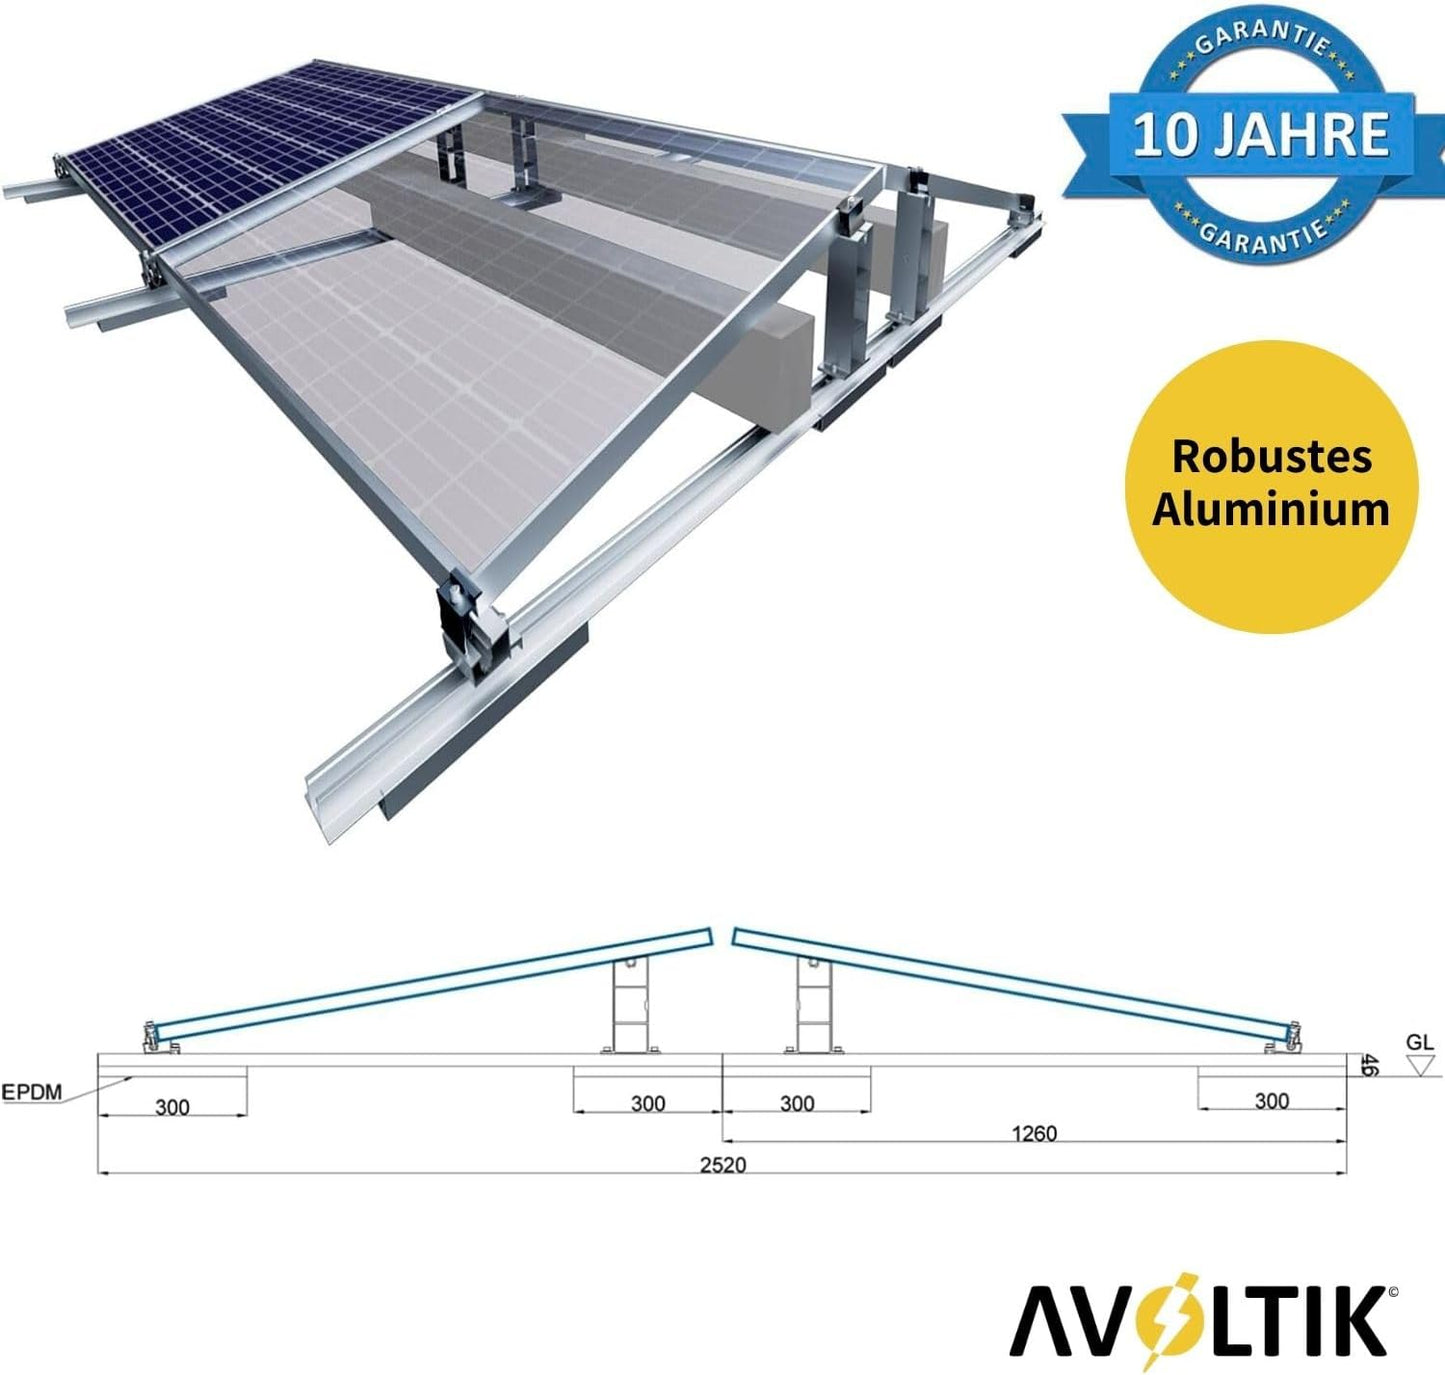 Avoltik Solarpanel Halterung für 4 Solar Module I Halterung für Solarmodule in flexibler Ausrichtung Bemaßung